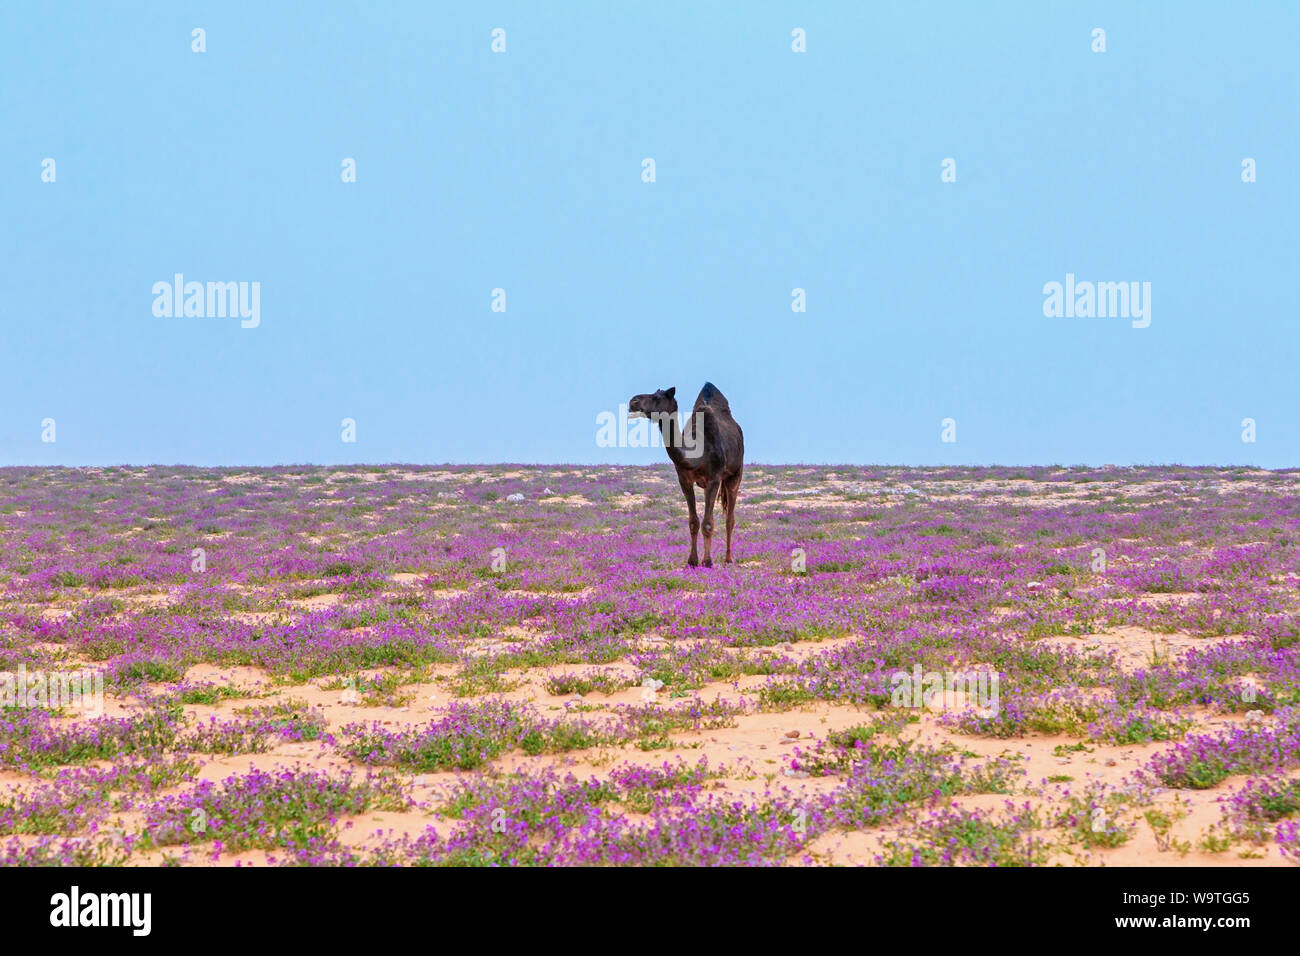 Camel standing in the desert, Riyadh, Saudi Arabia Stock Photo